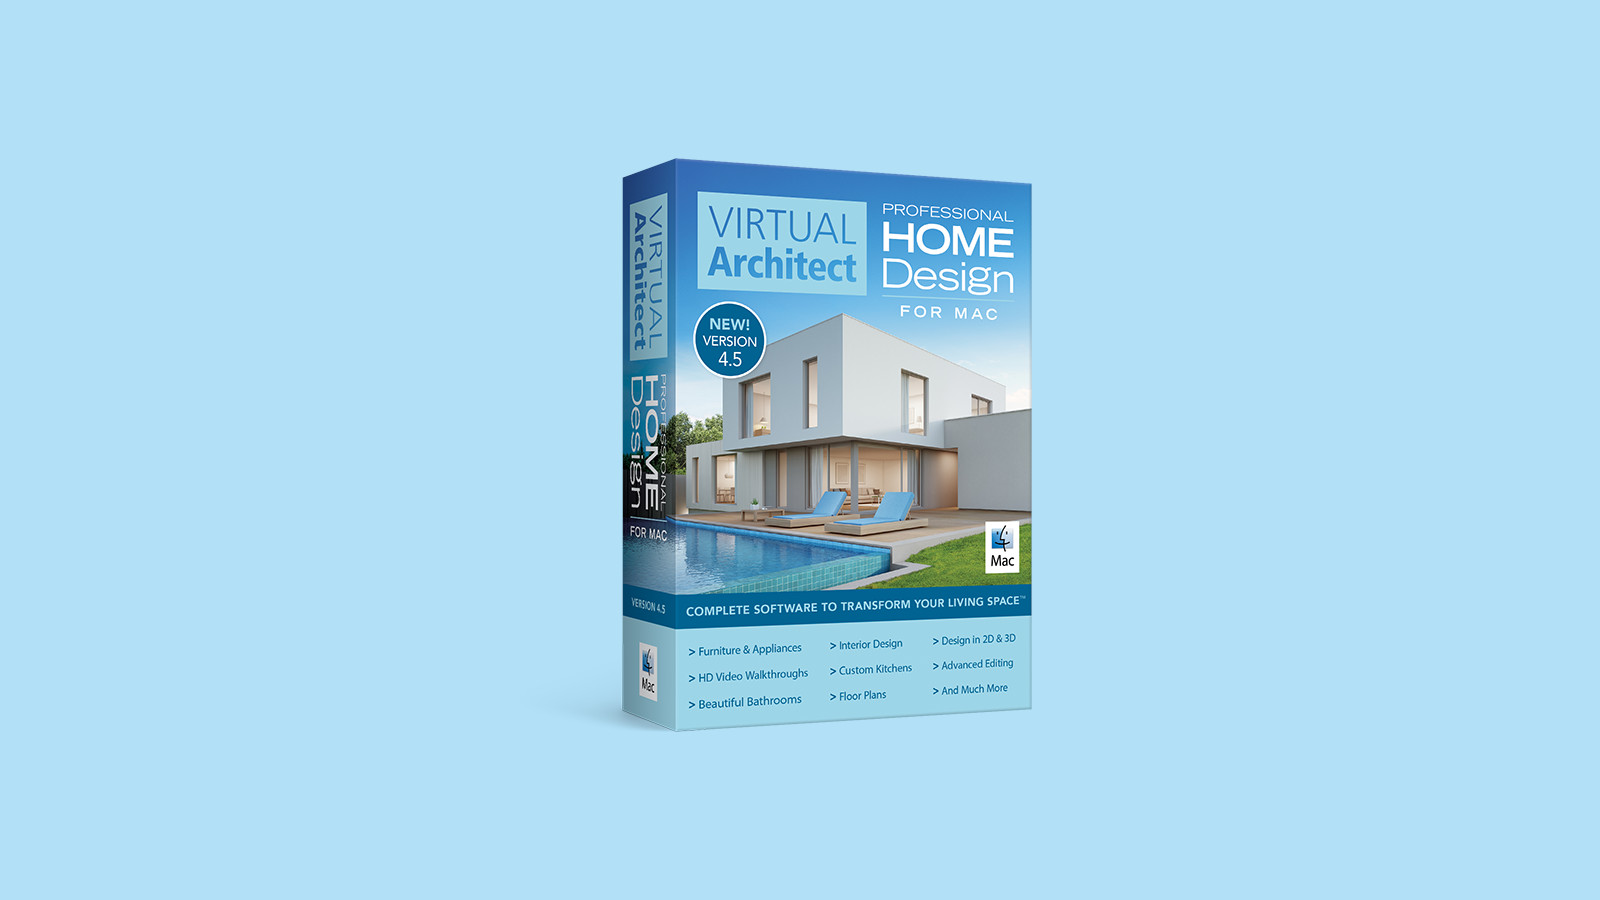 Virtual Architect Professional Home Design for Mac CD Key 64.8 usd